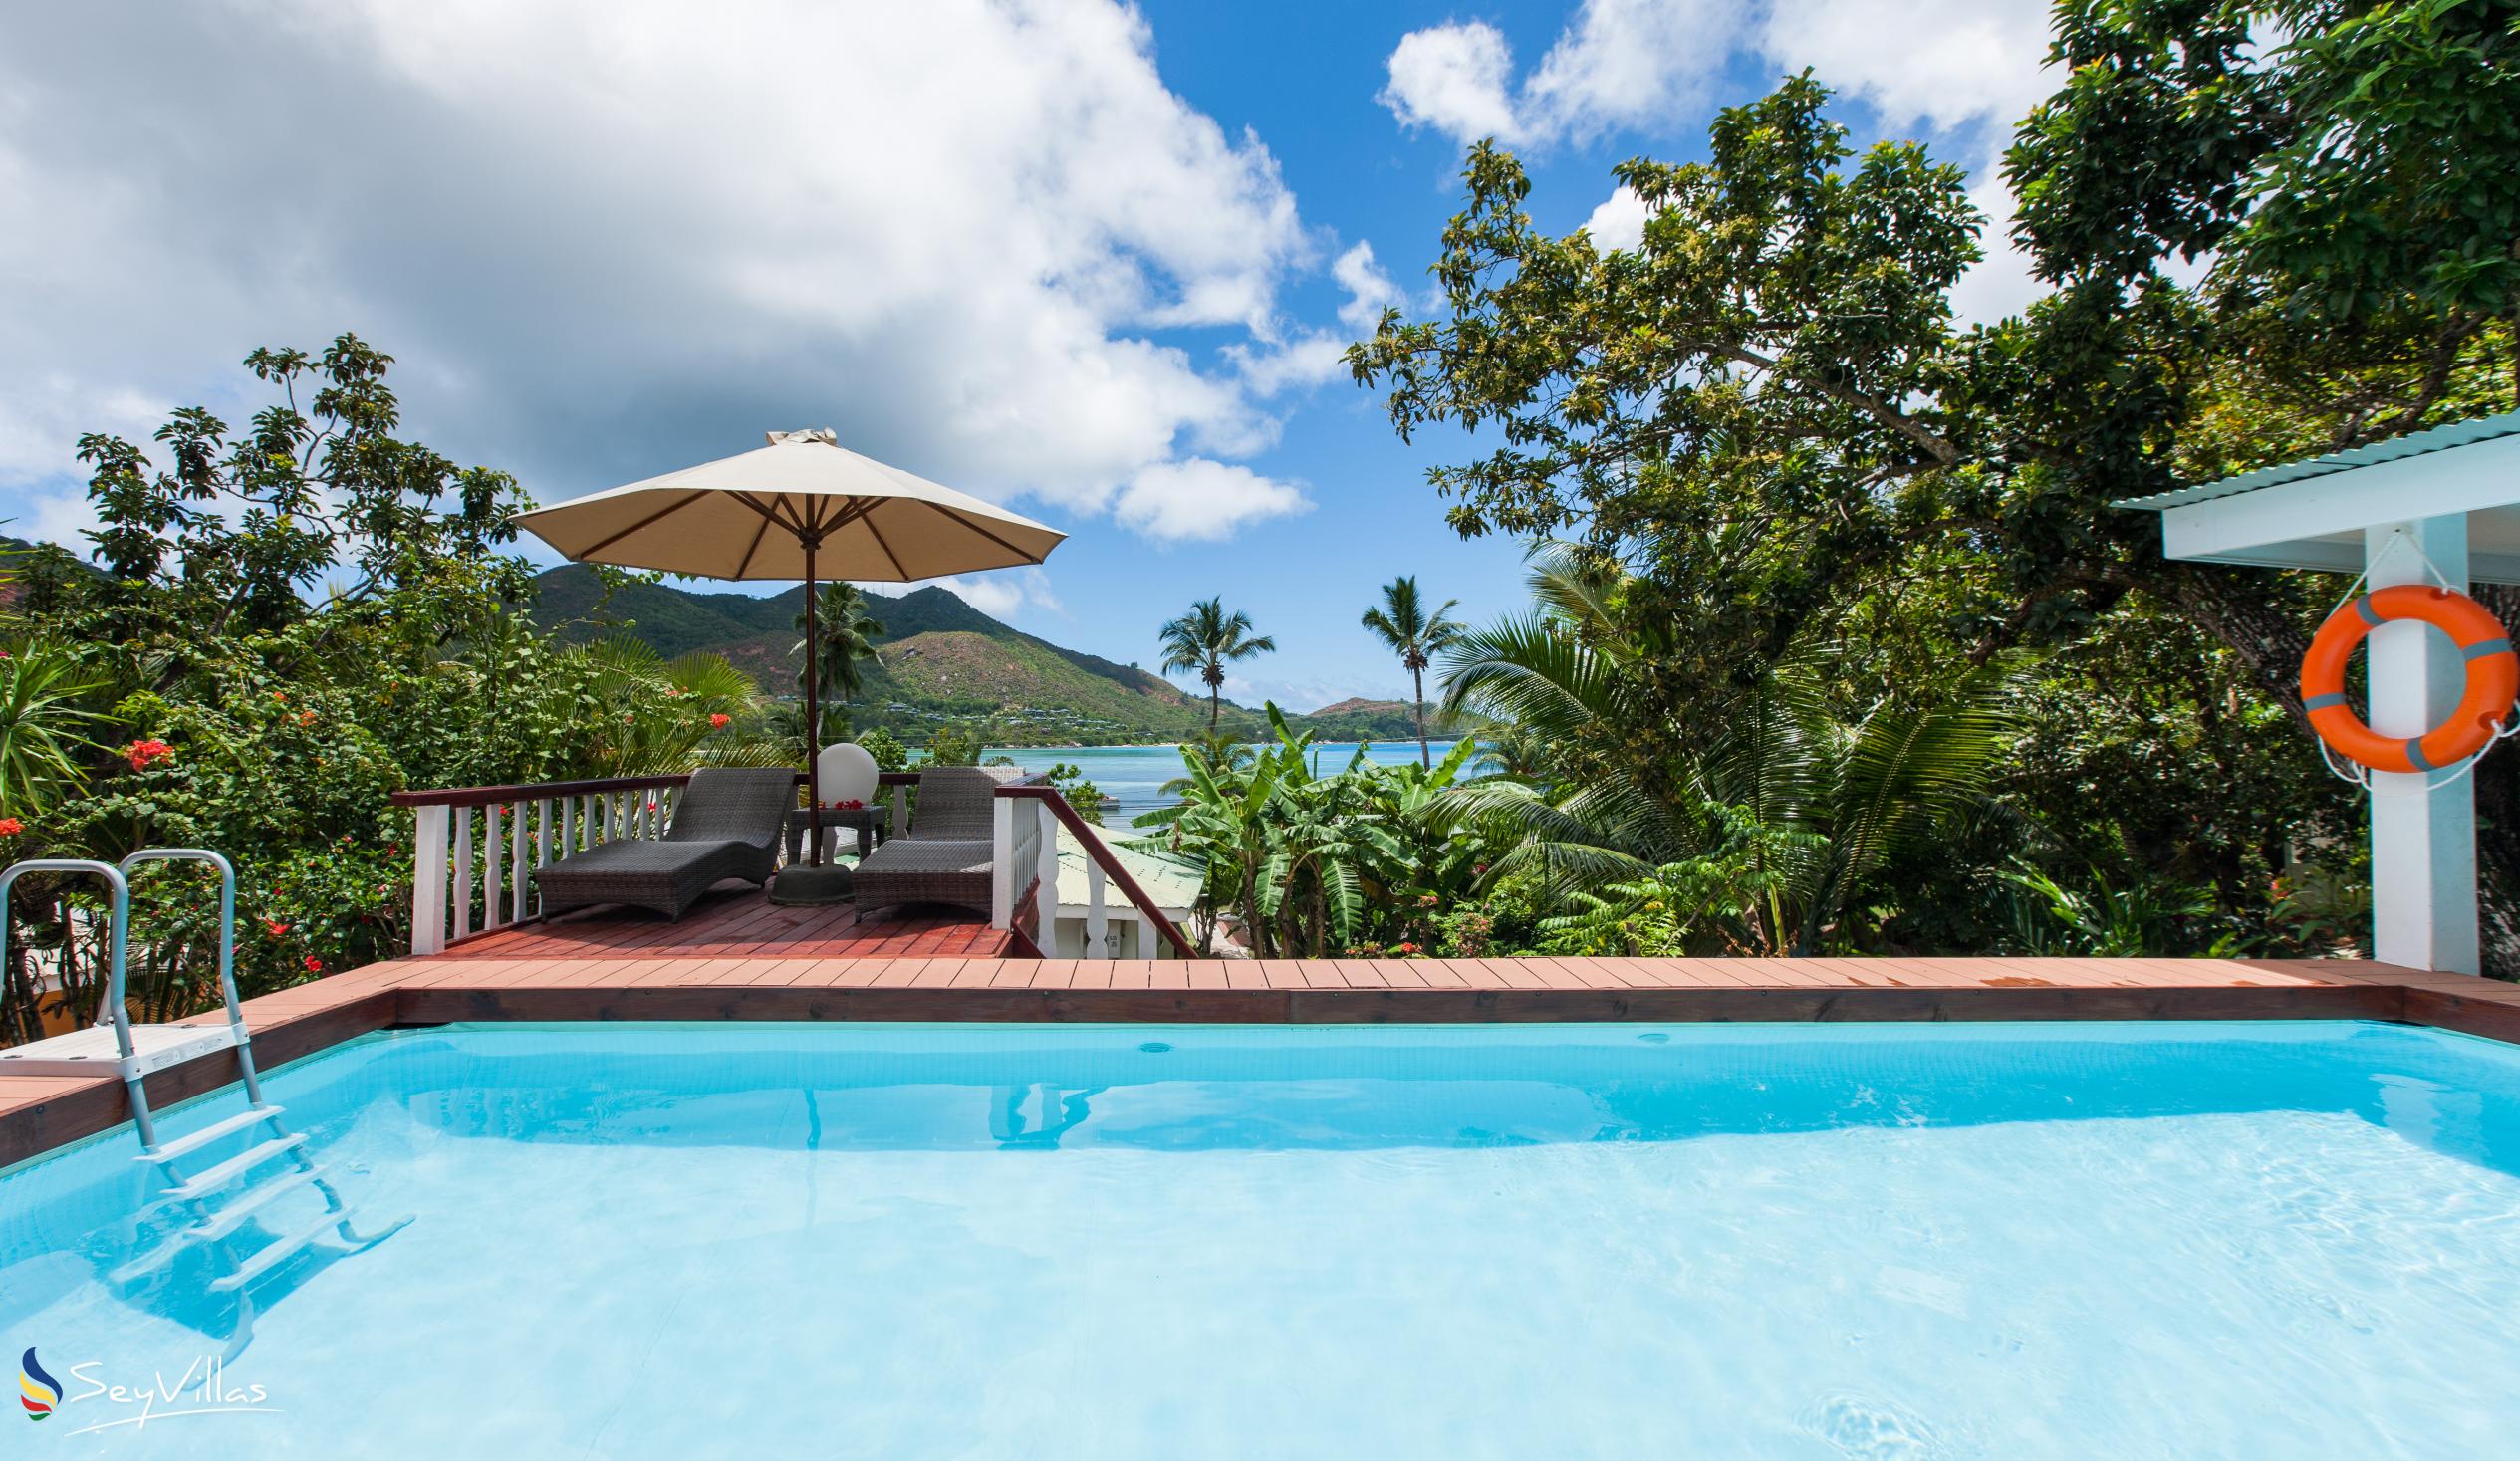 Photo 88: Sea View Lodge - Outdoor area - Praslin (Seychelles)